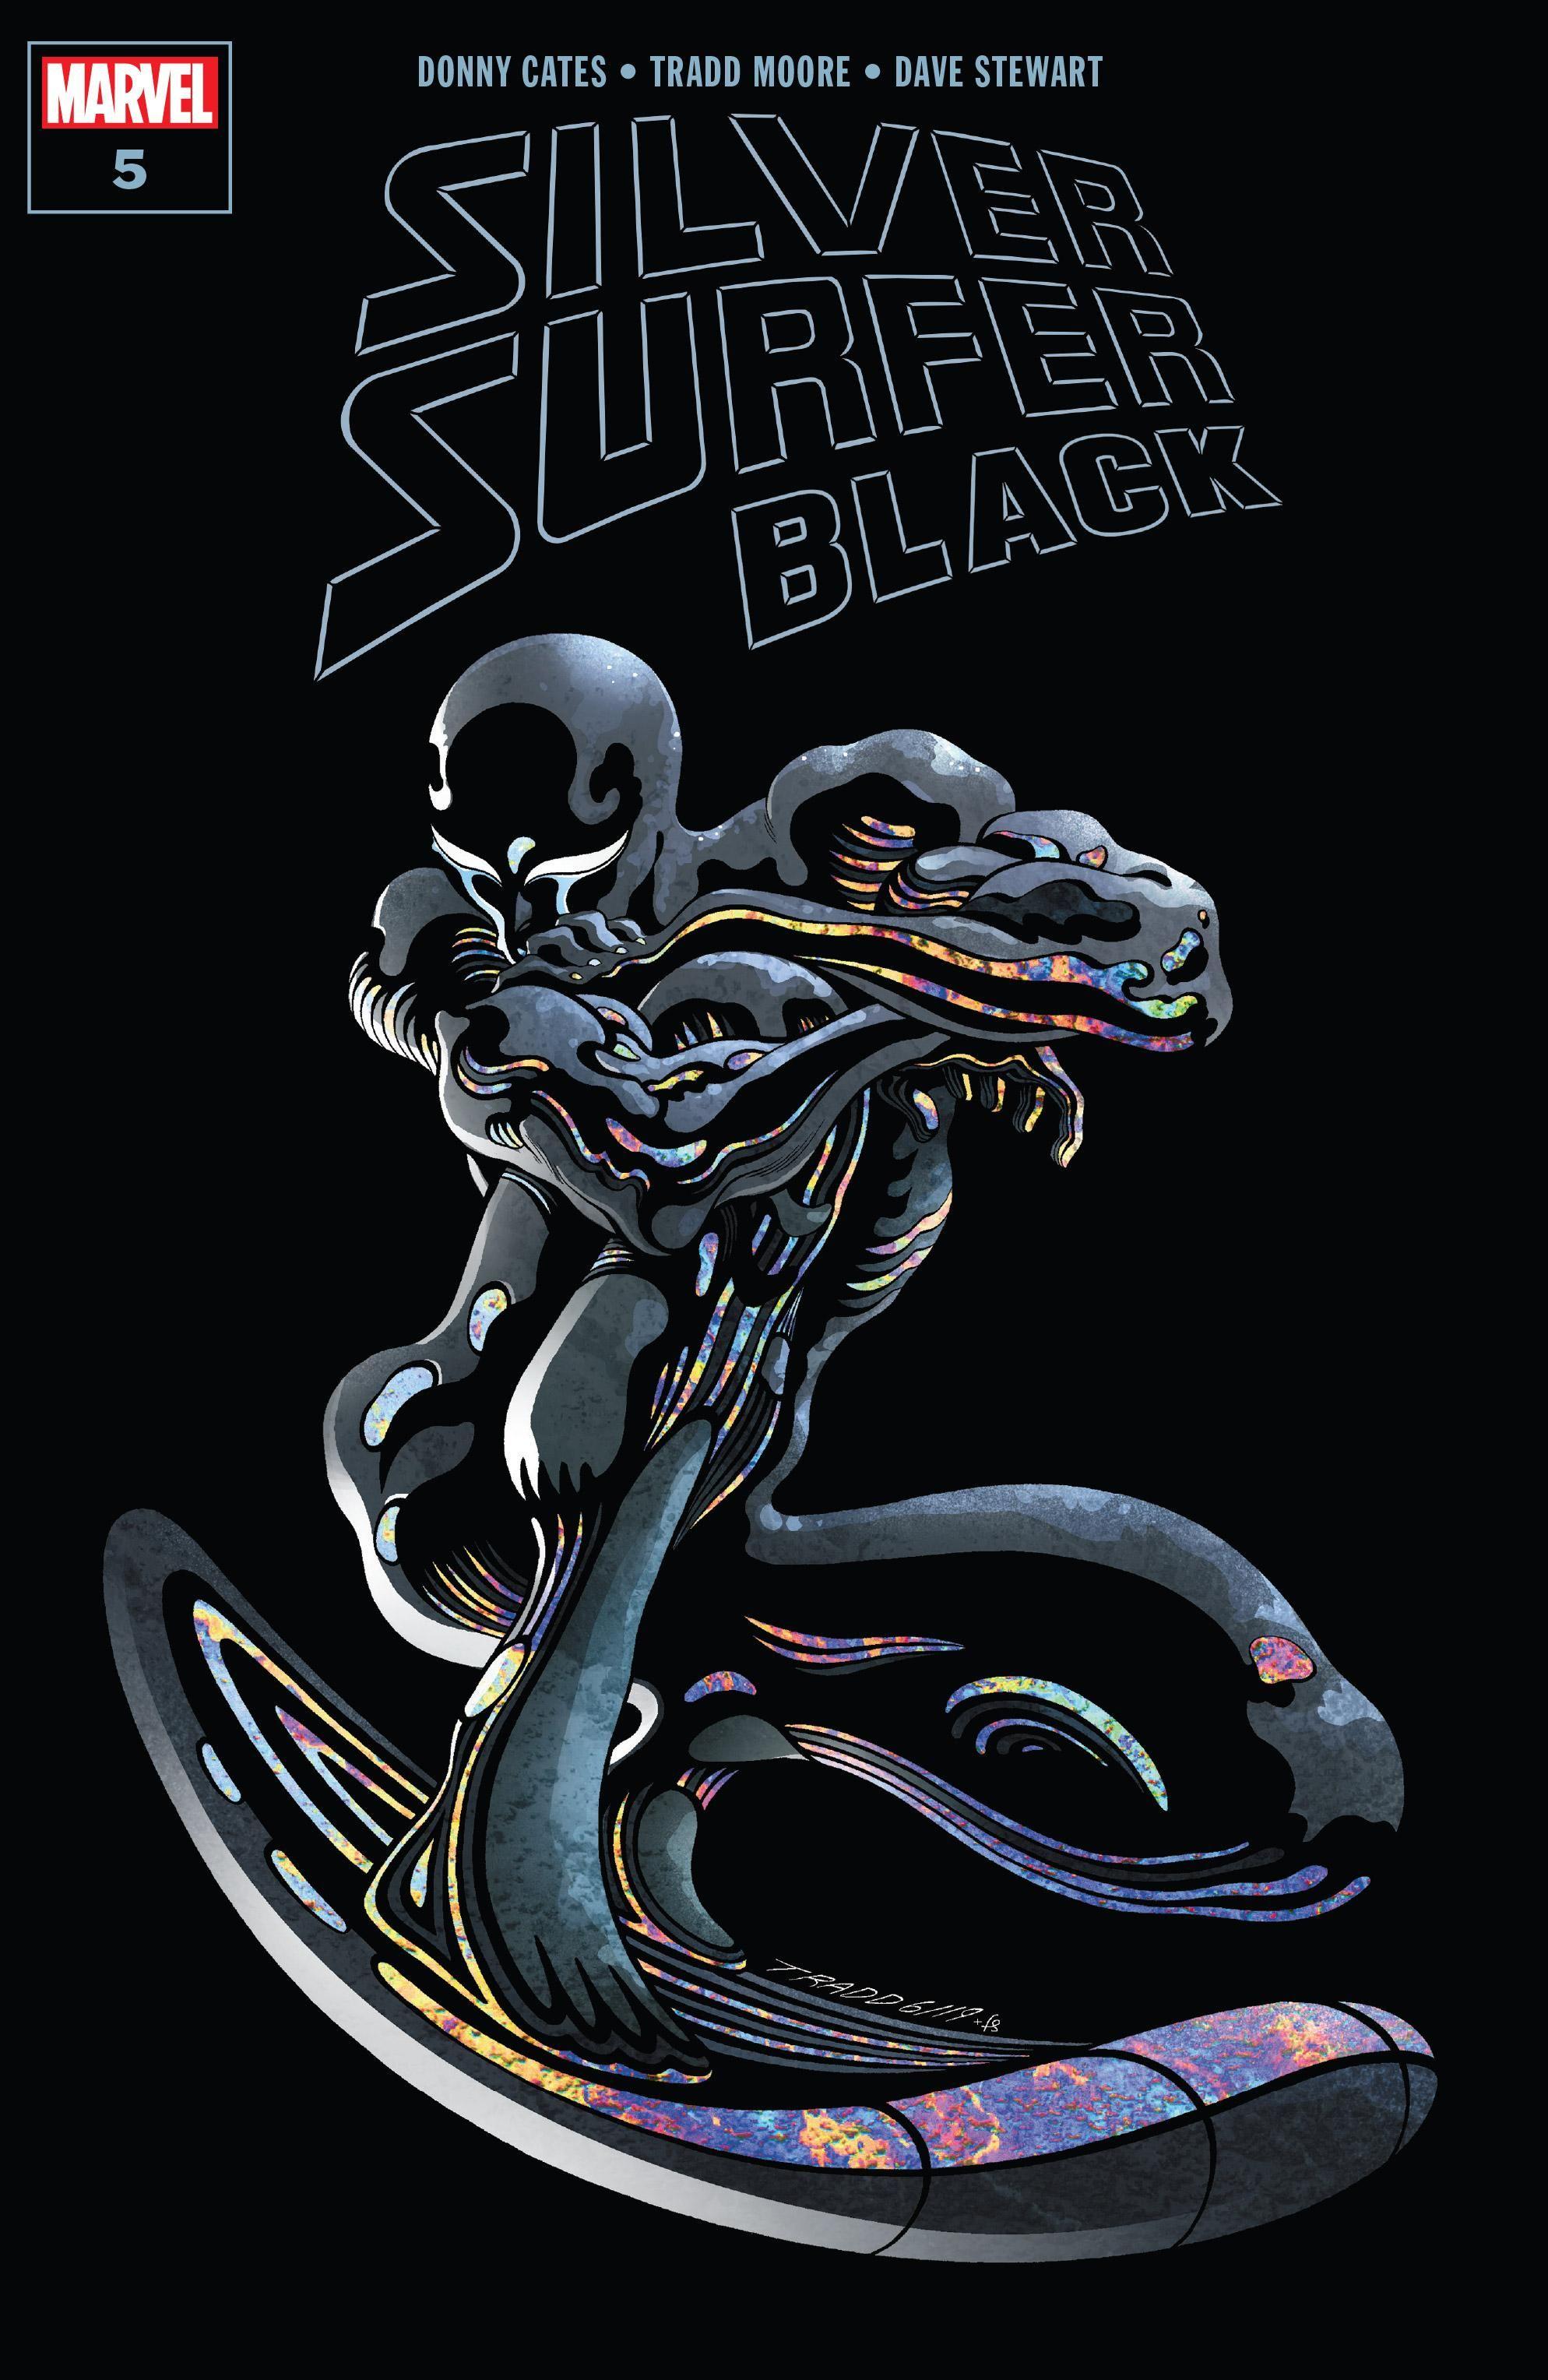 Silver Surfer: Black Vol. 1 #5